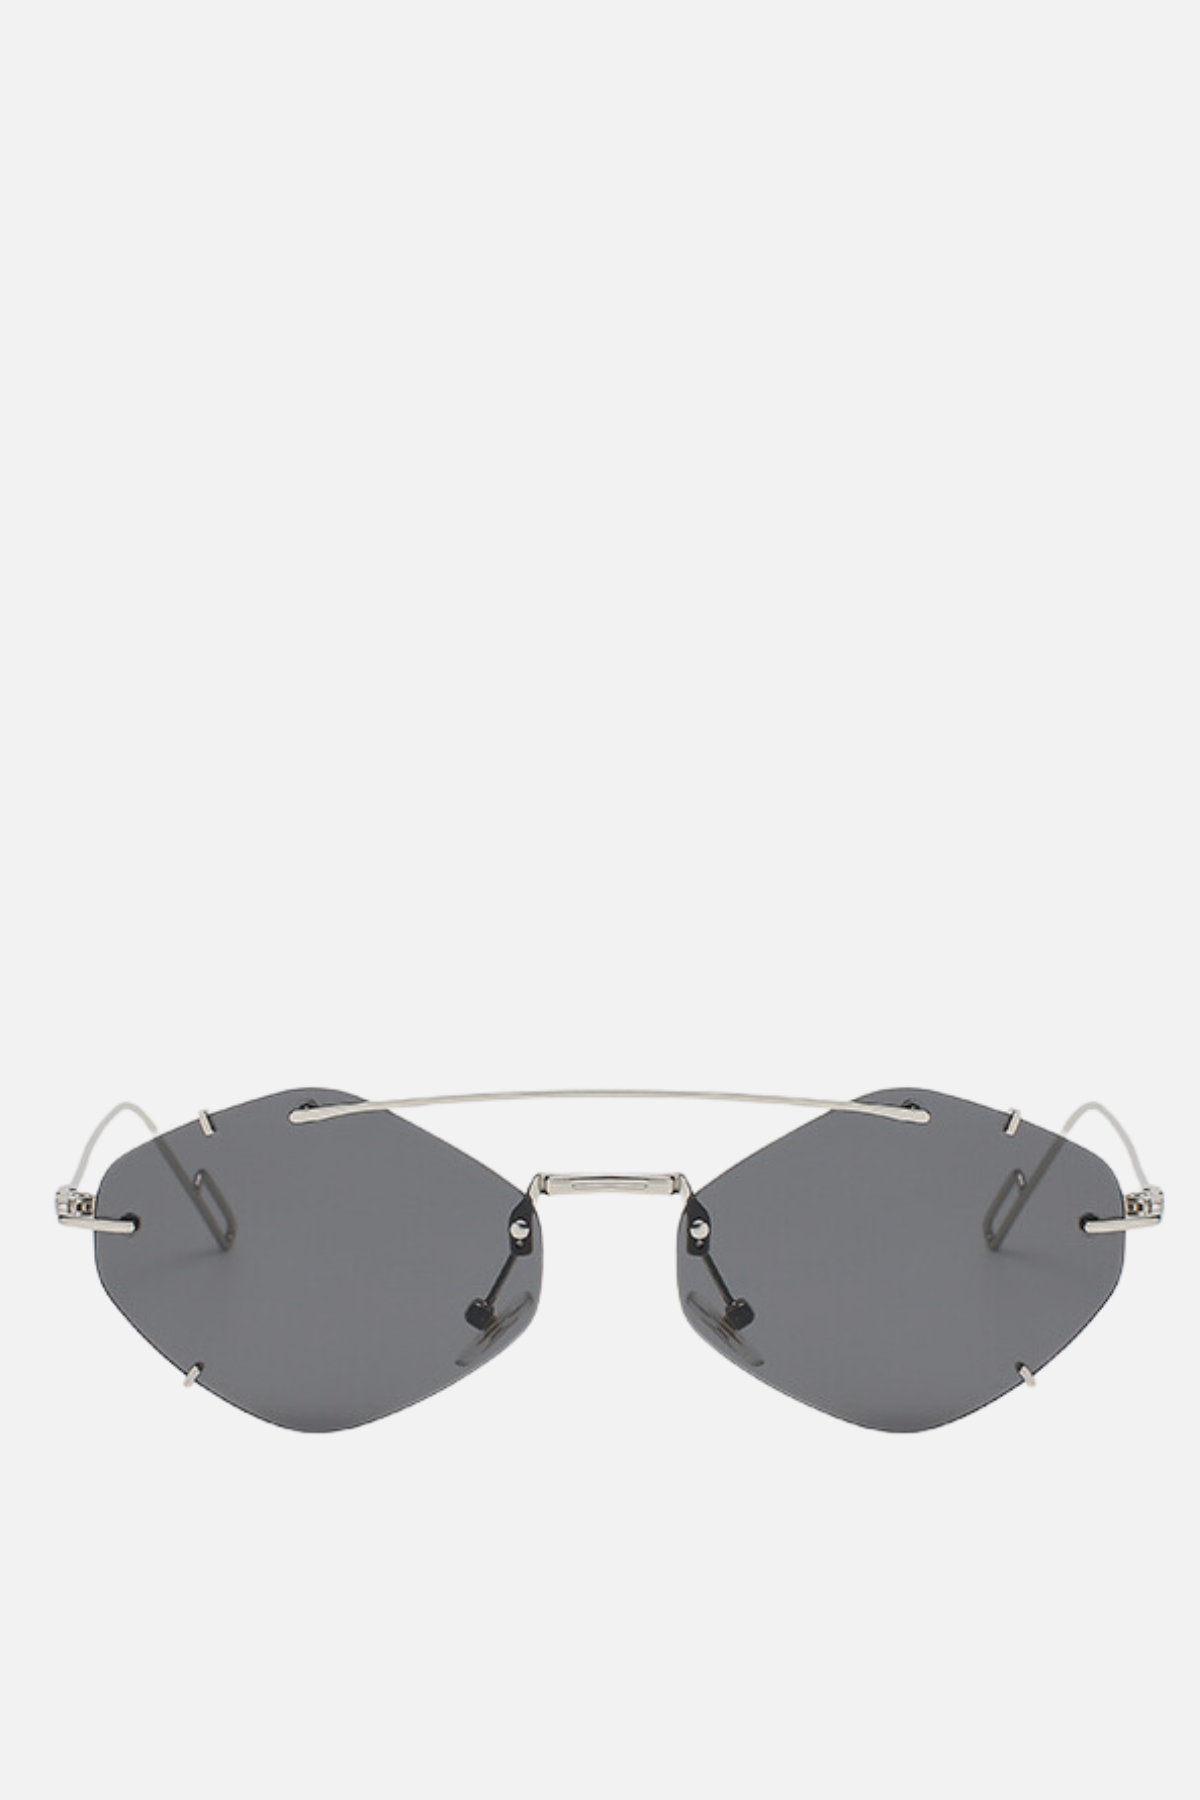 PALMA Hexagon Black Sunglasses